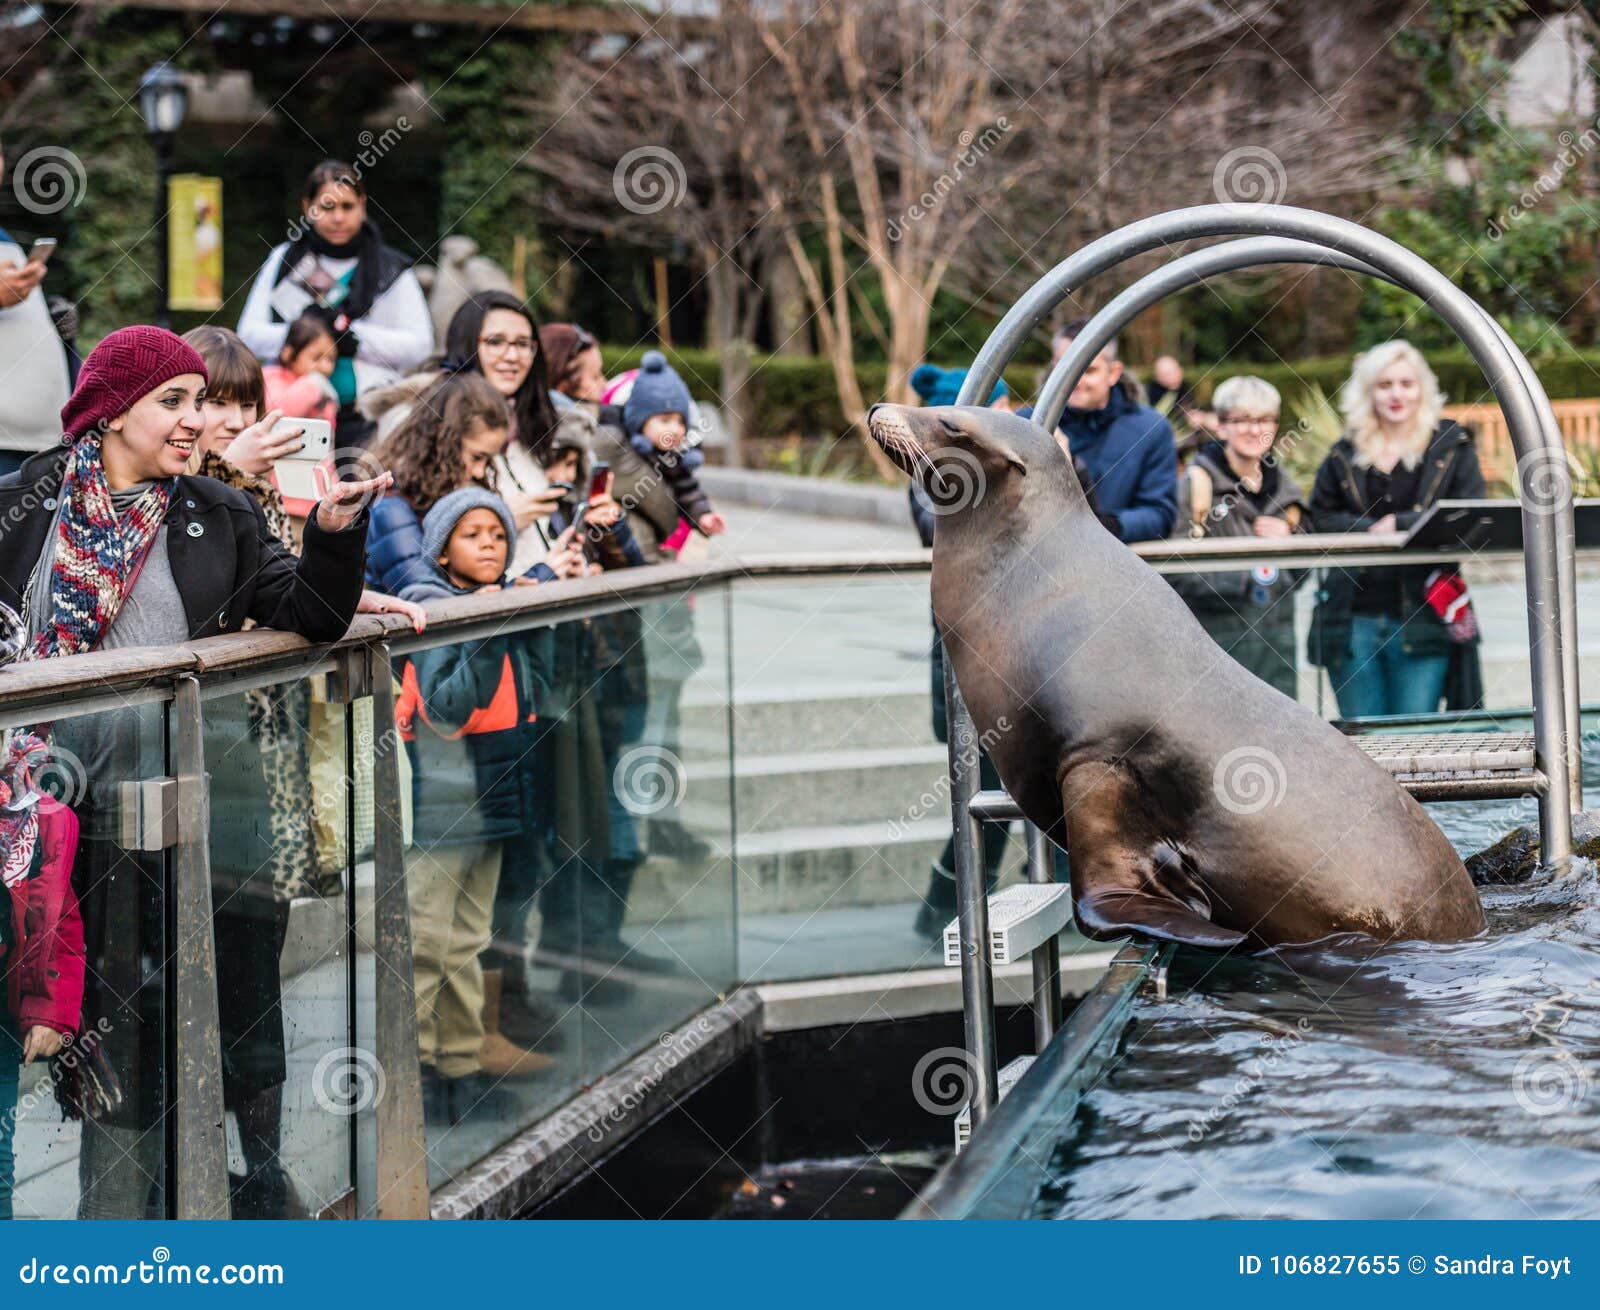 Central Park Zoo Sea Lion Exhibit - New York, NY Editorial Image ...